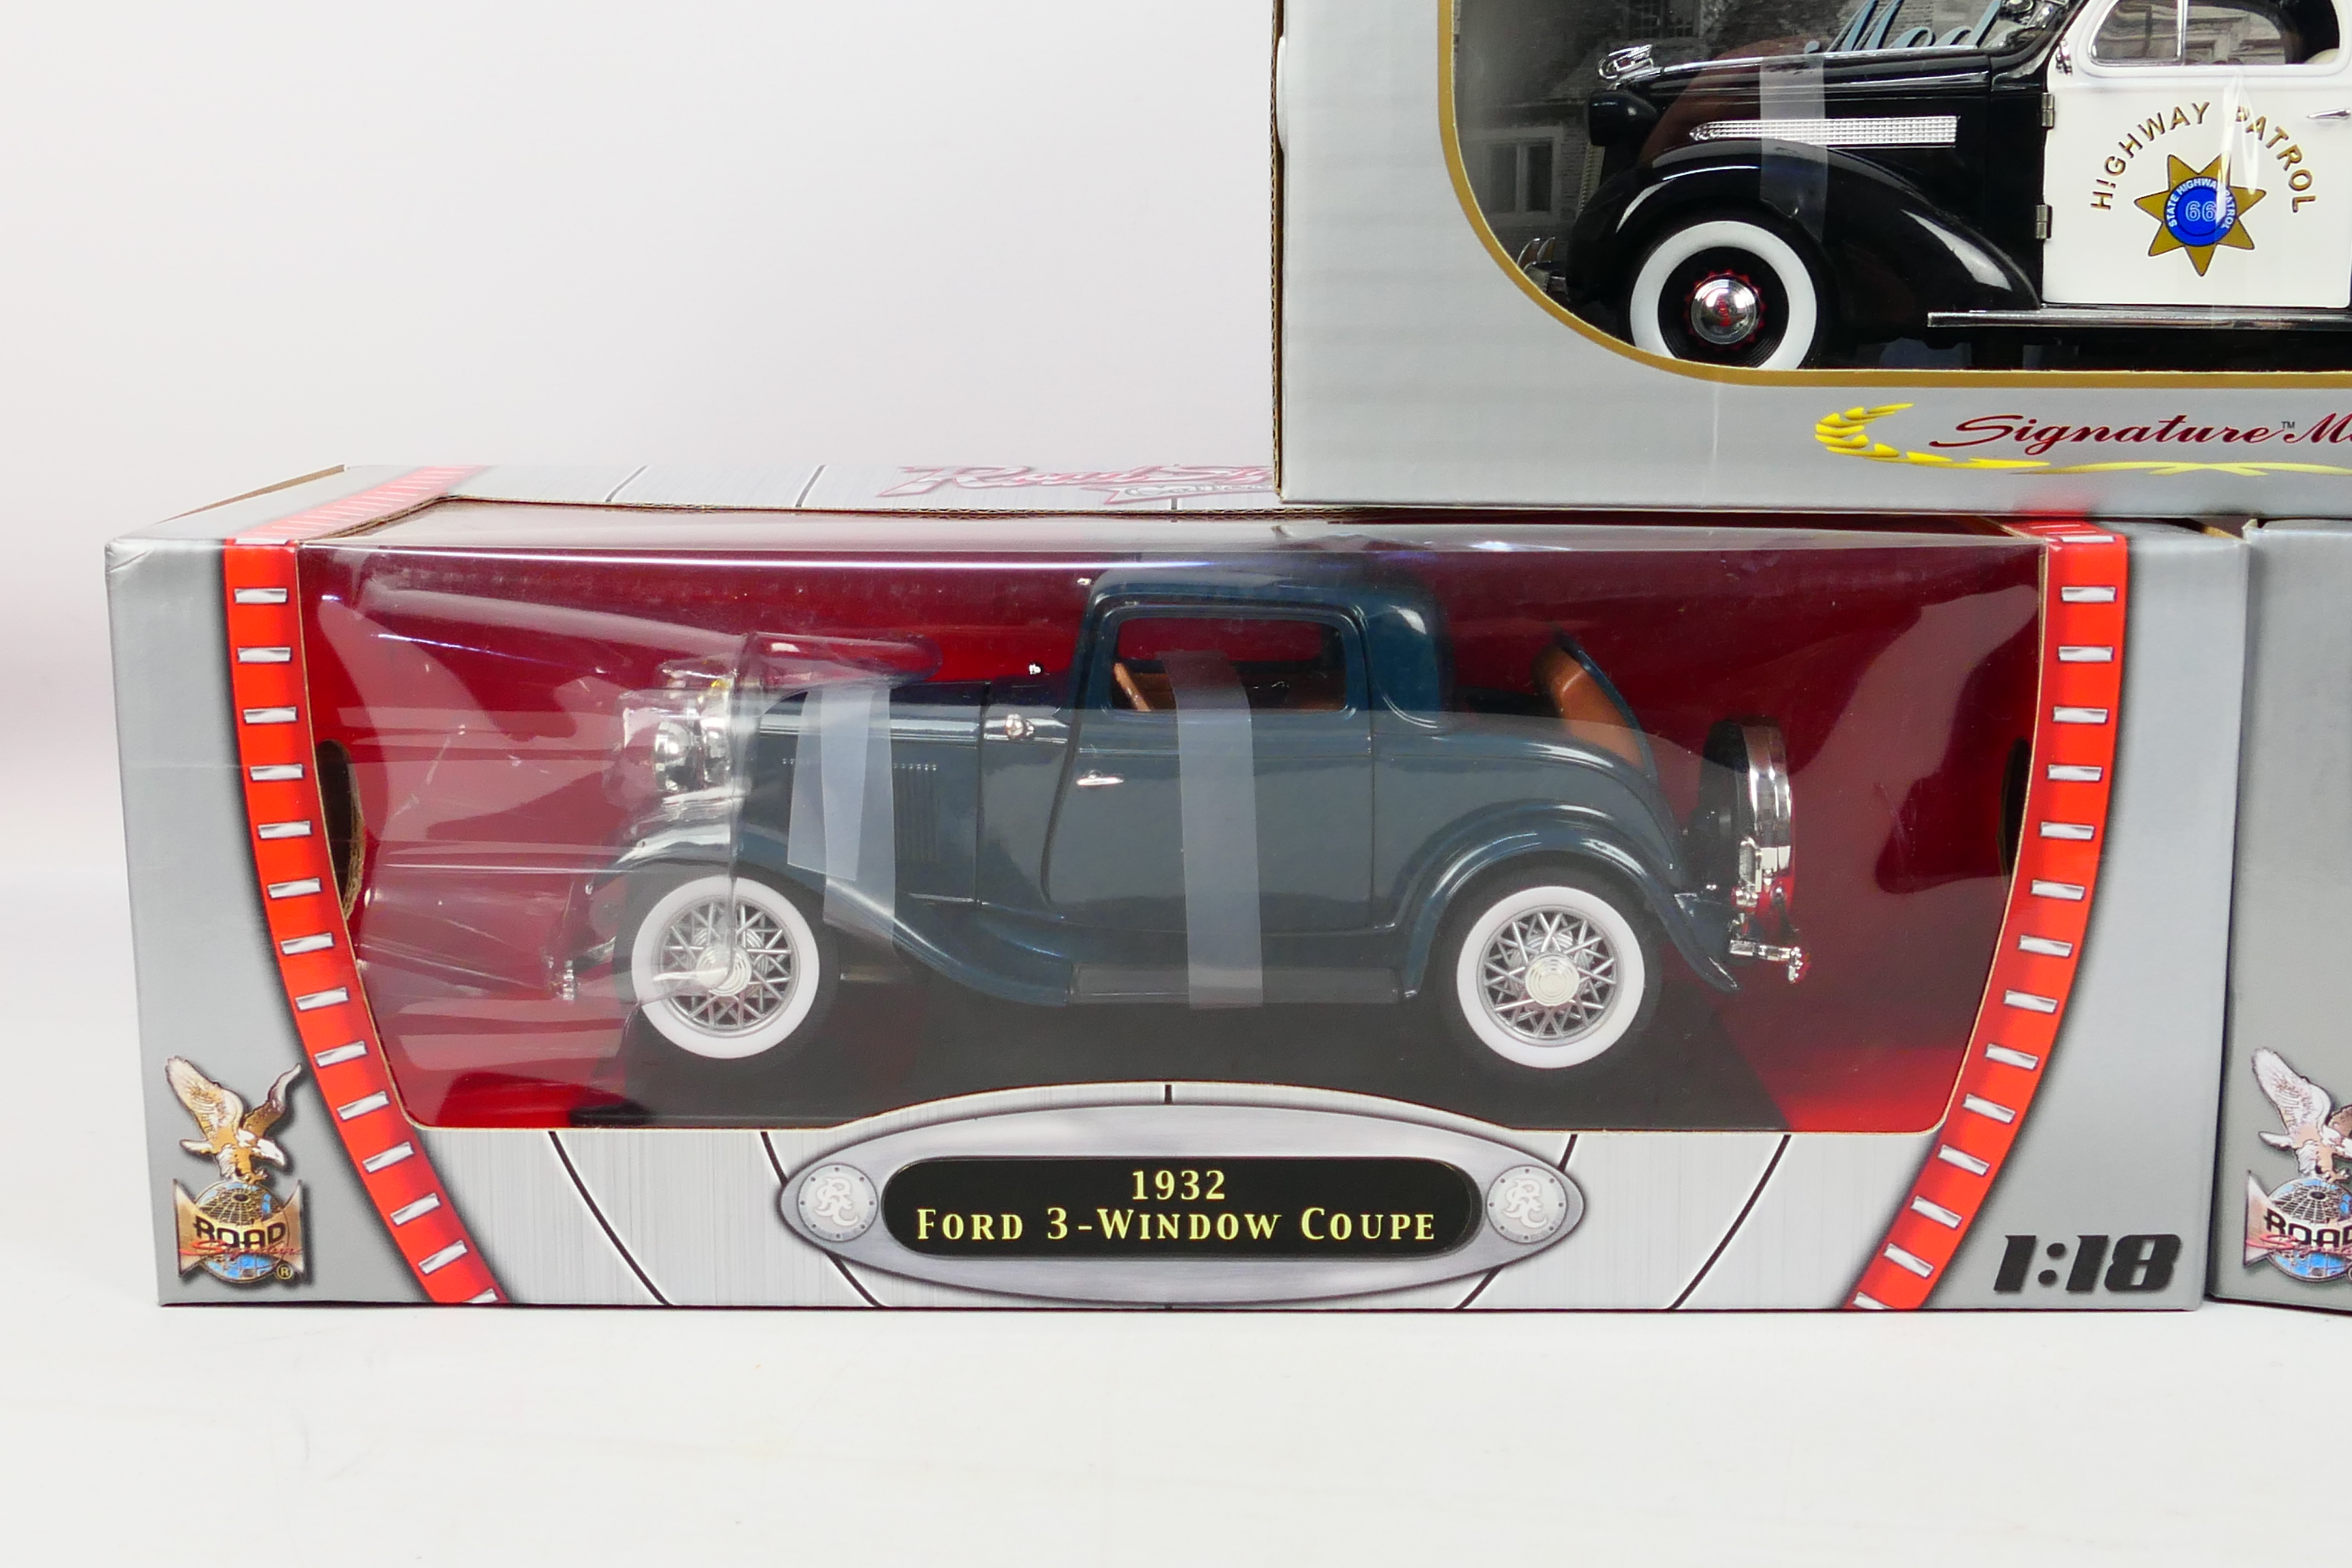 Road Signature - Signature Models - Three boxed diecast 1:18 scale model cars. - Image 3 of 4